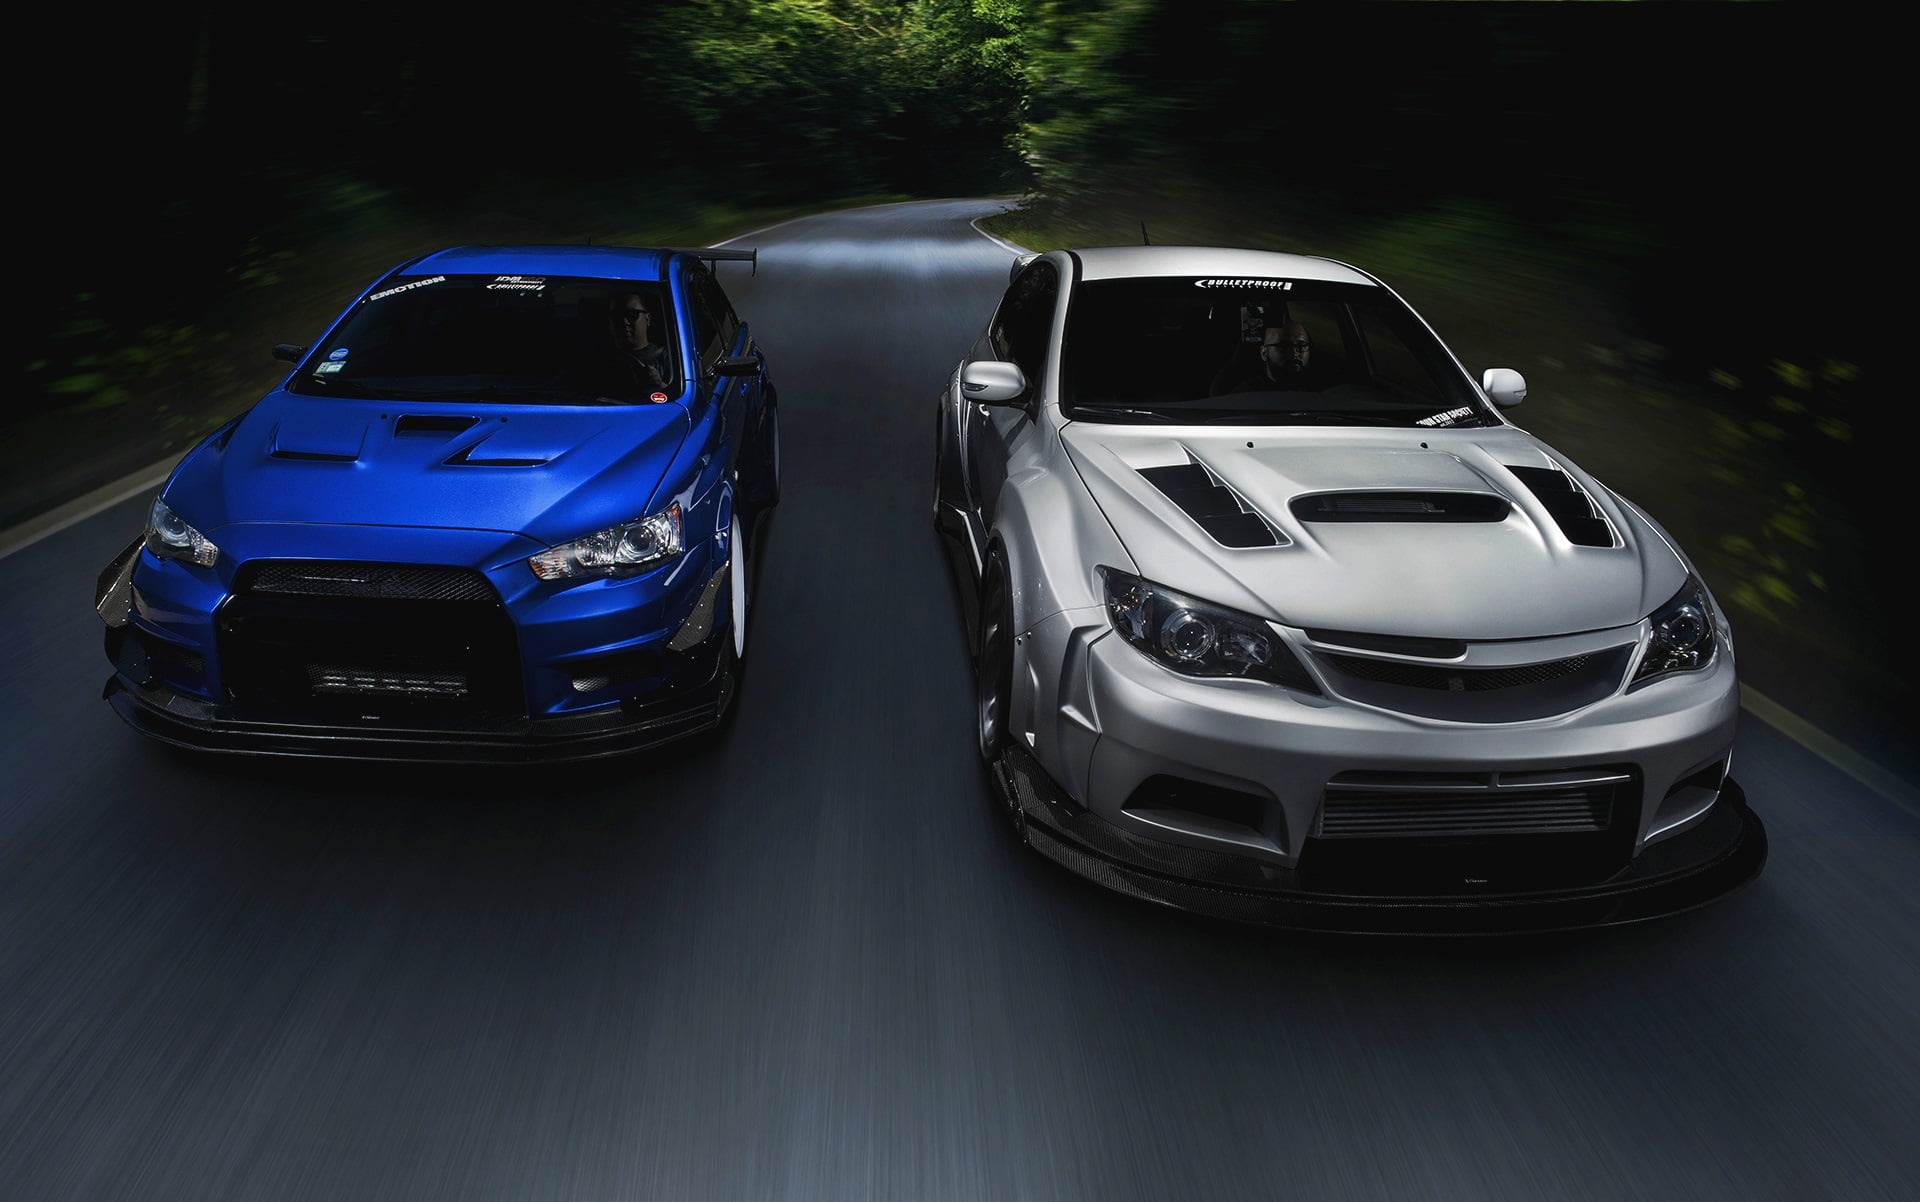 two silver-and-blue Subaru Impreza, Mitsubishi, Lancer, Evolution